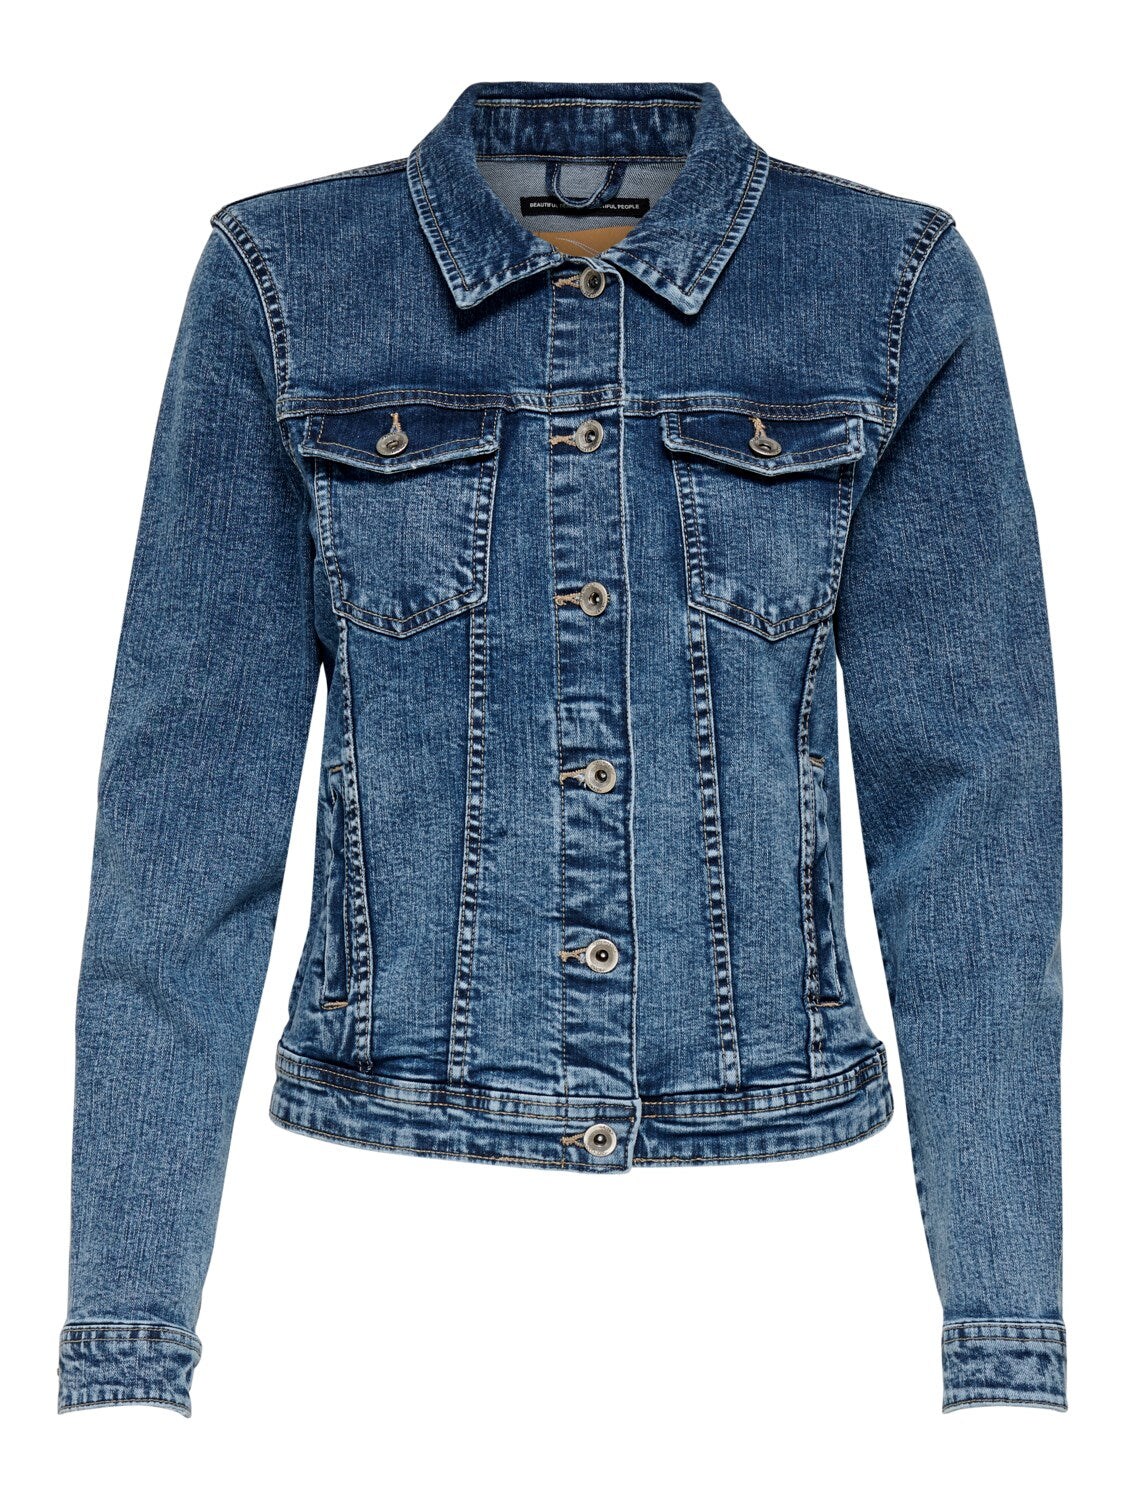 ONLY Jeans Jacke 'Tia' Medium Blue Denim, Unifarben, Blau - Gr. 34